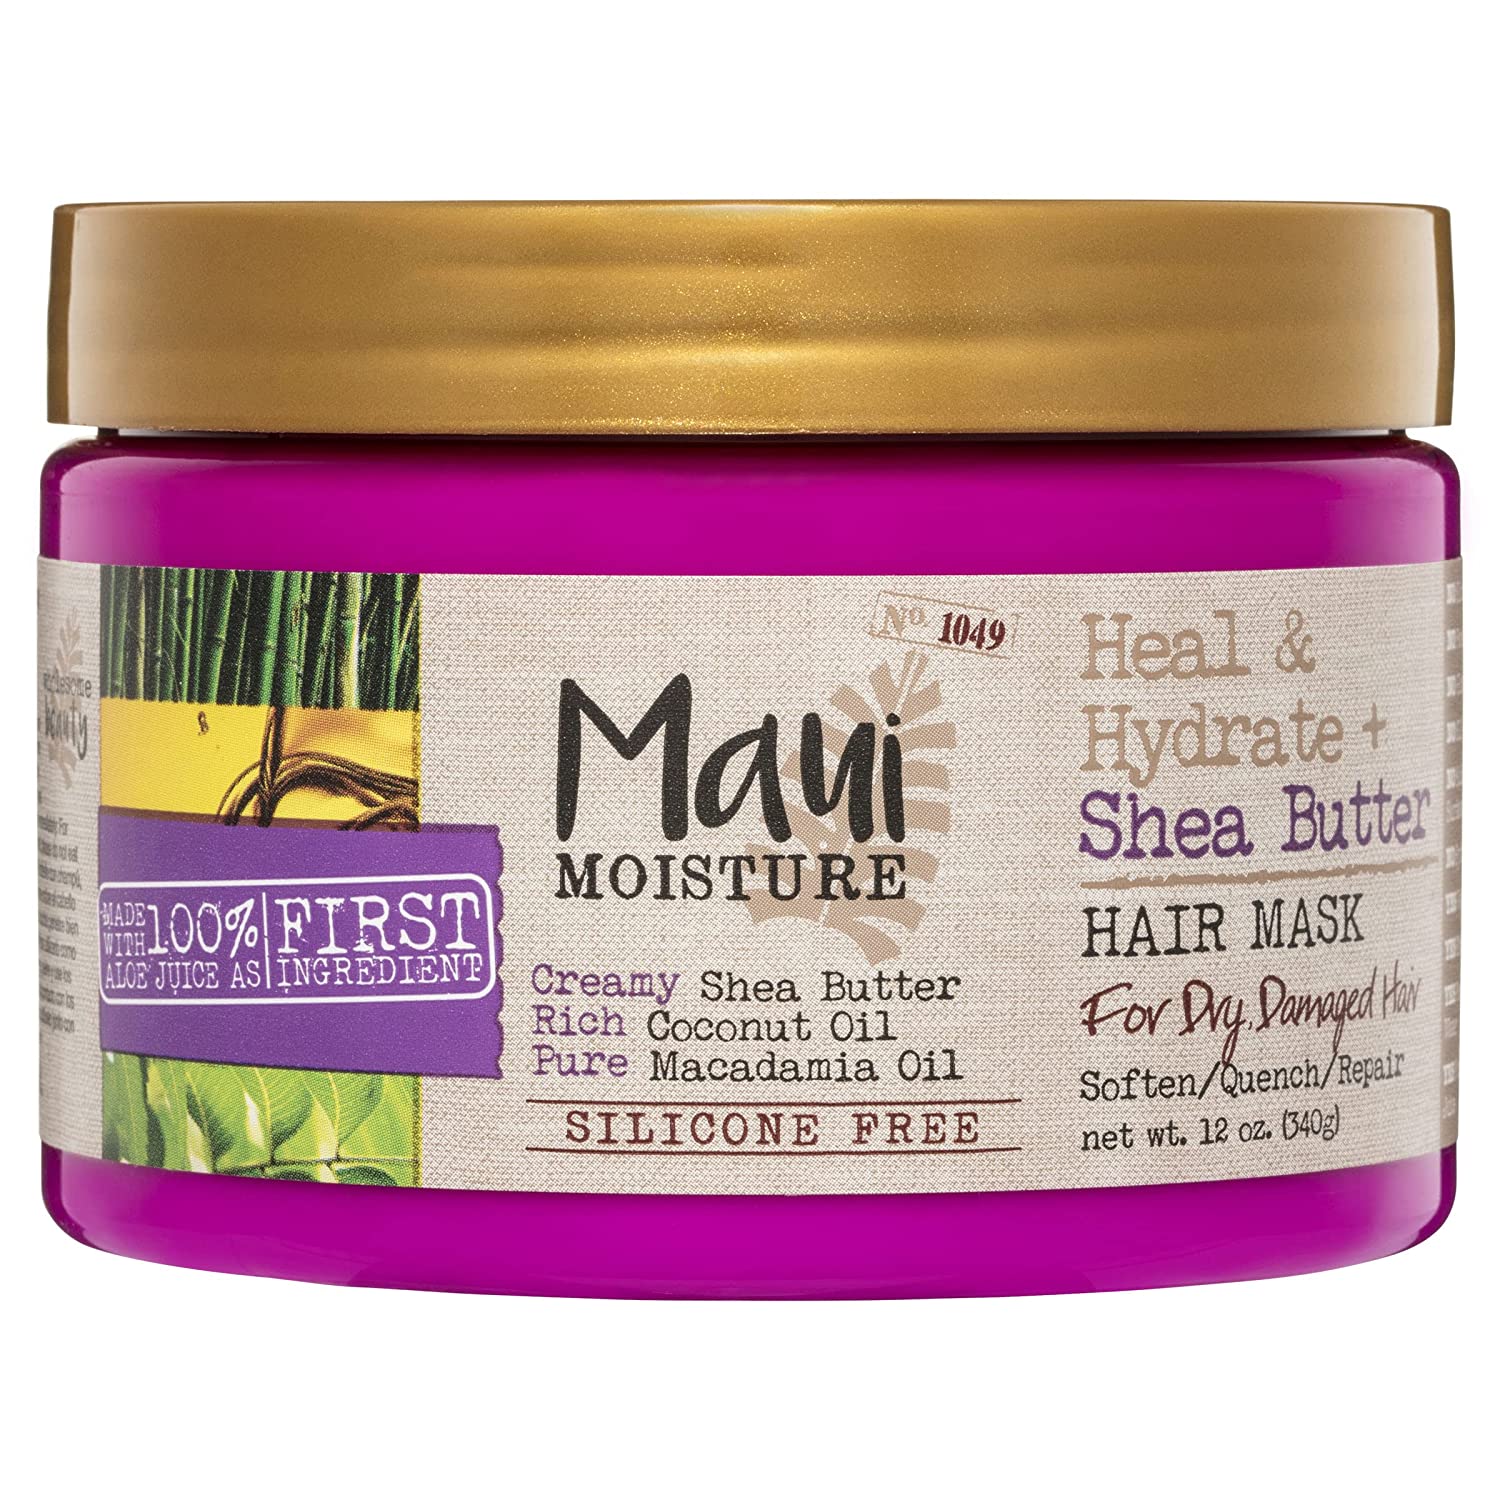 Maui Moisture Heal & Hydrate + Shea Butter Hair Ma